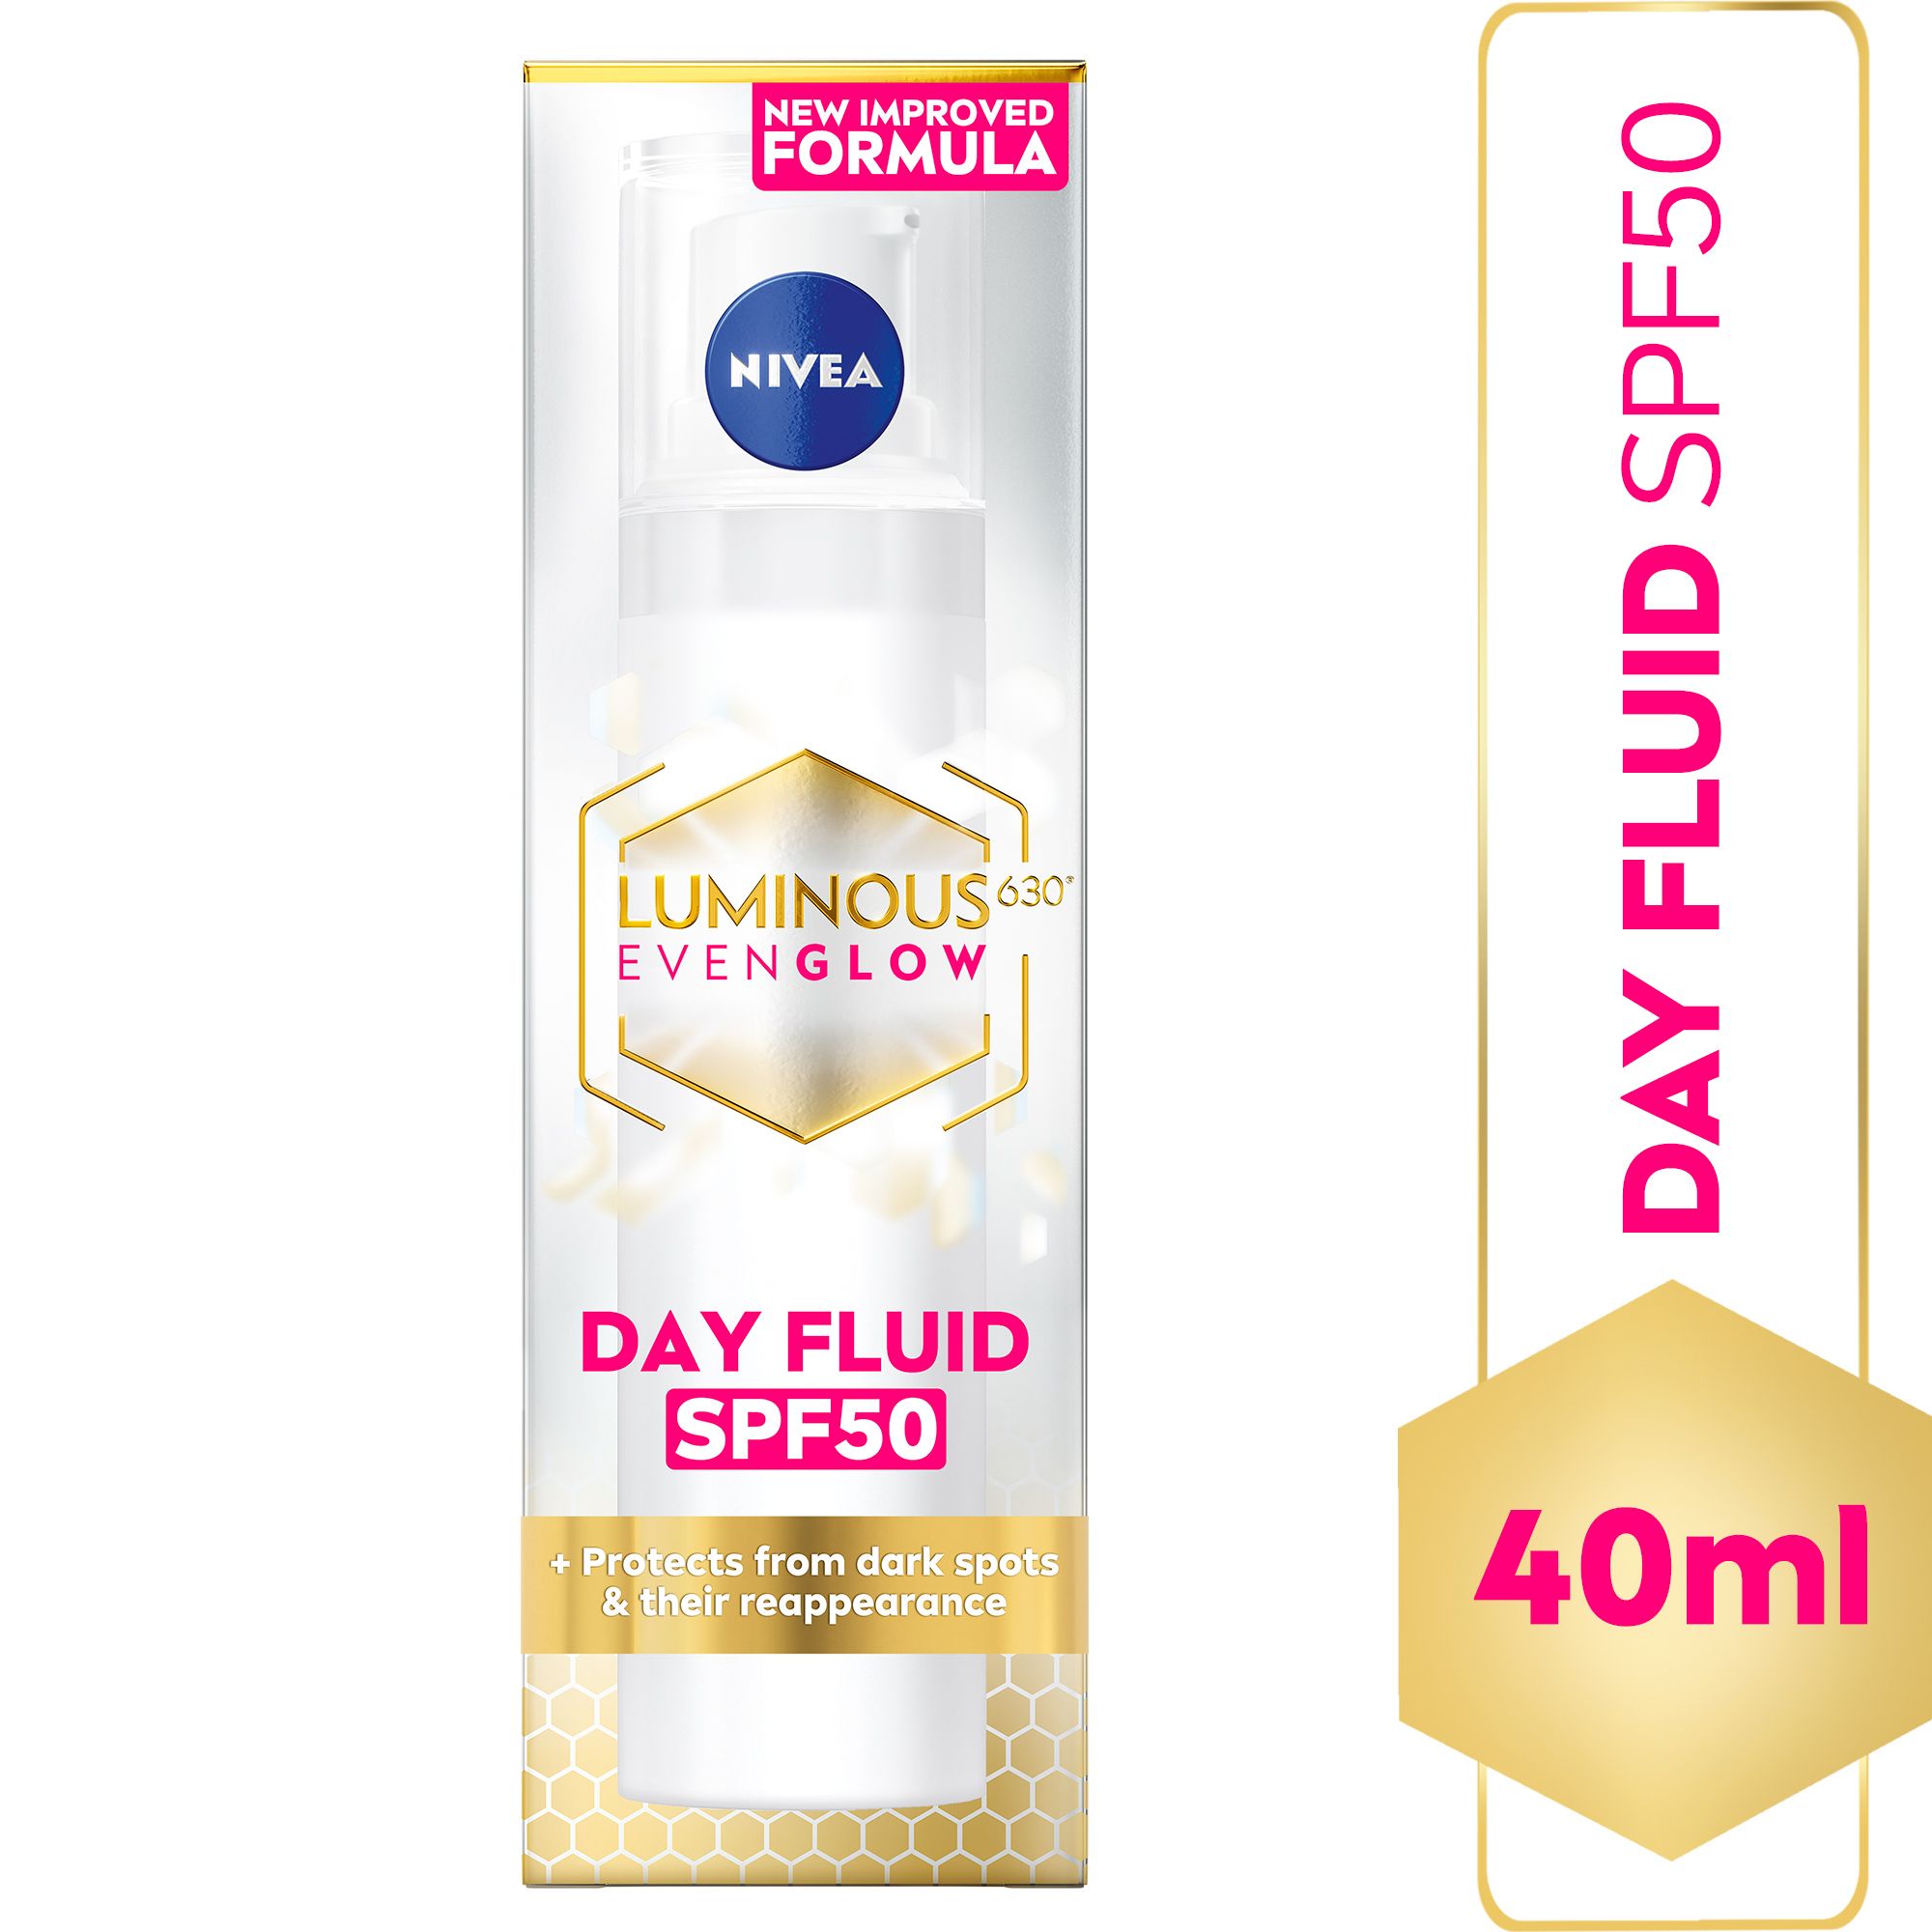 LUMINOUS630 EVEN GLOW Face Day Fluid SPF 50, Spot Darkening Protection, 40ml